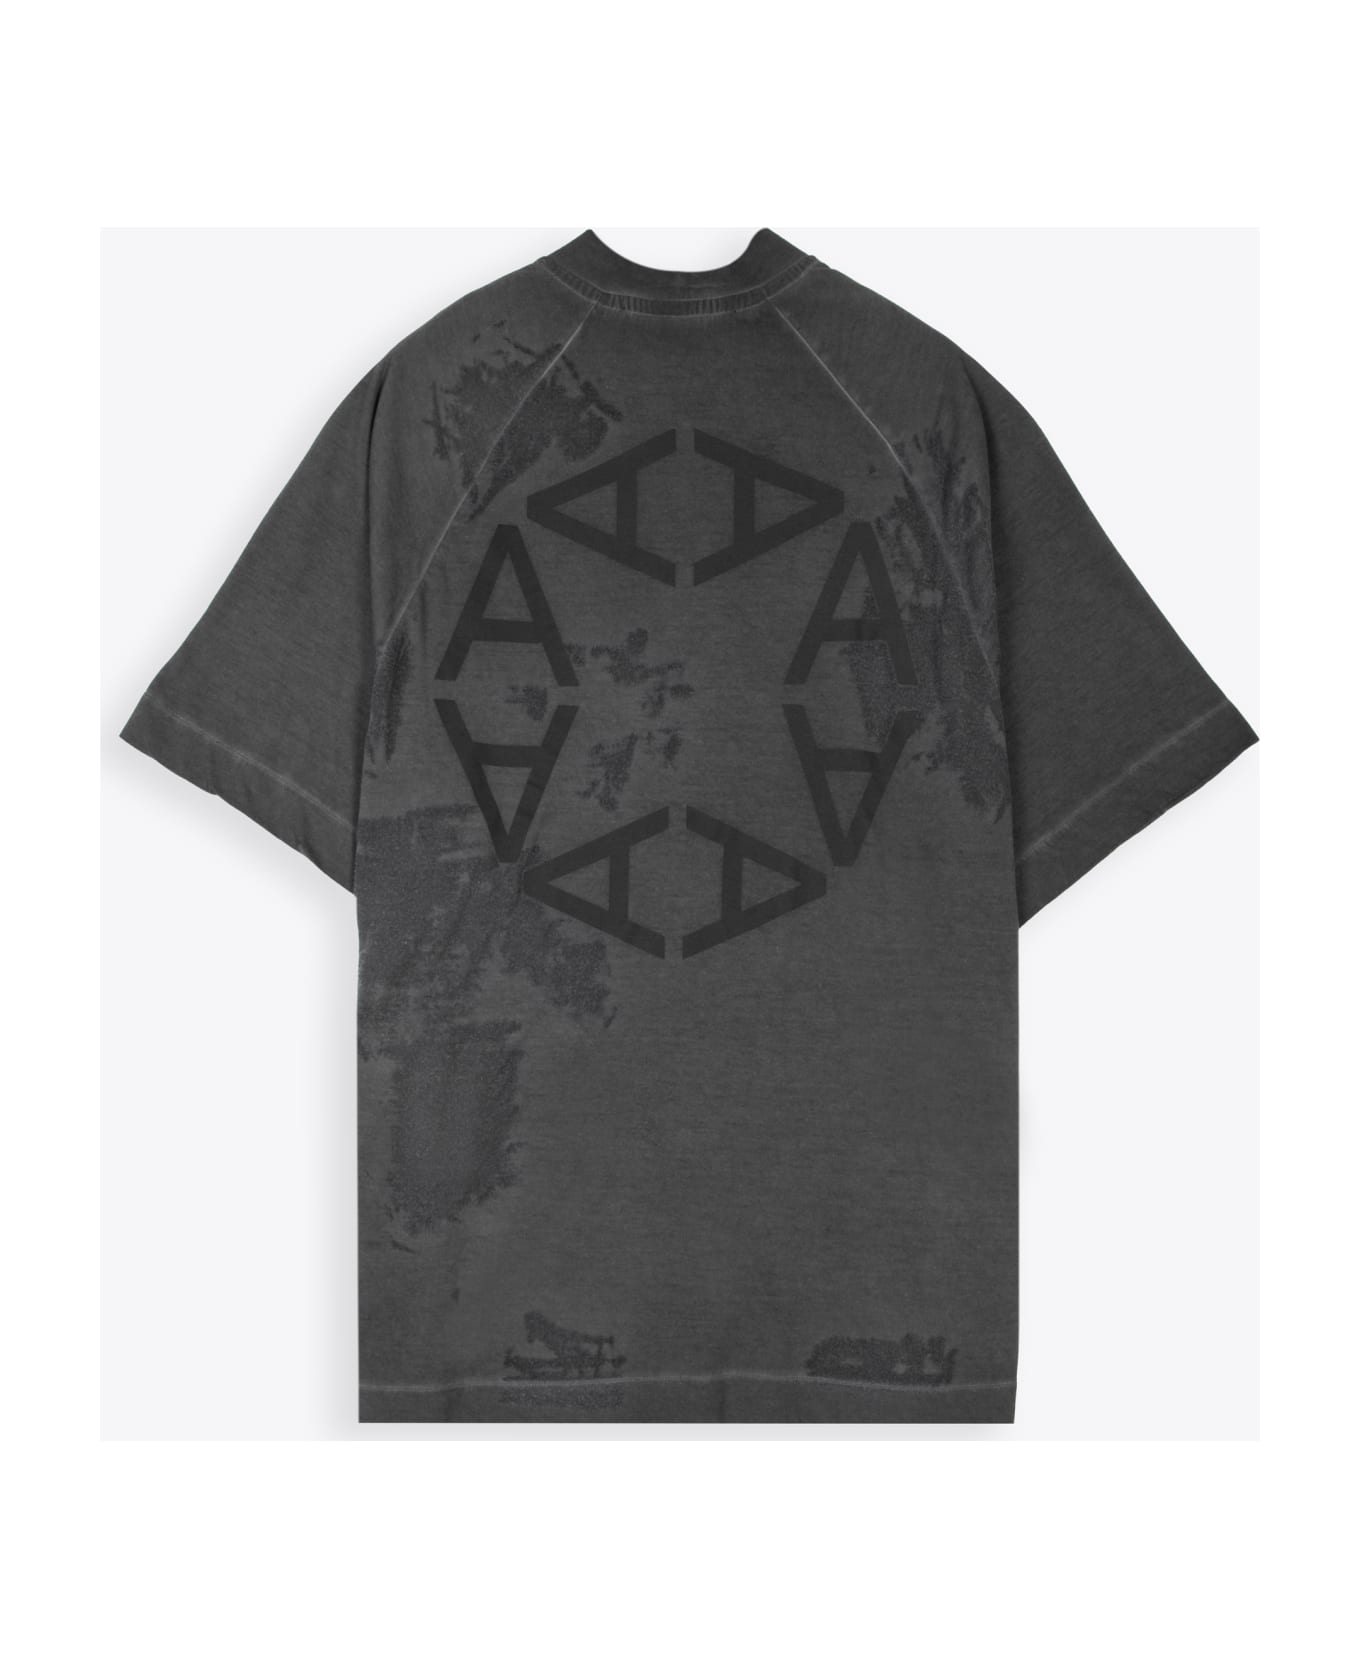 1017 ALYX 9SM Oversized Translucent Graphic Logo T-shirt Black Distressed And Washed Cotton T-shirt With Back Logo - Oversized Translucent Graphic Logo T-shirt - Nero